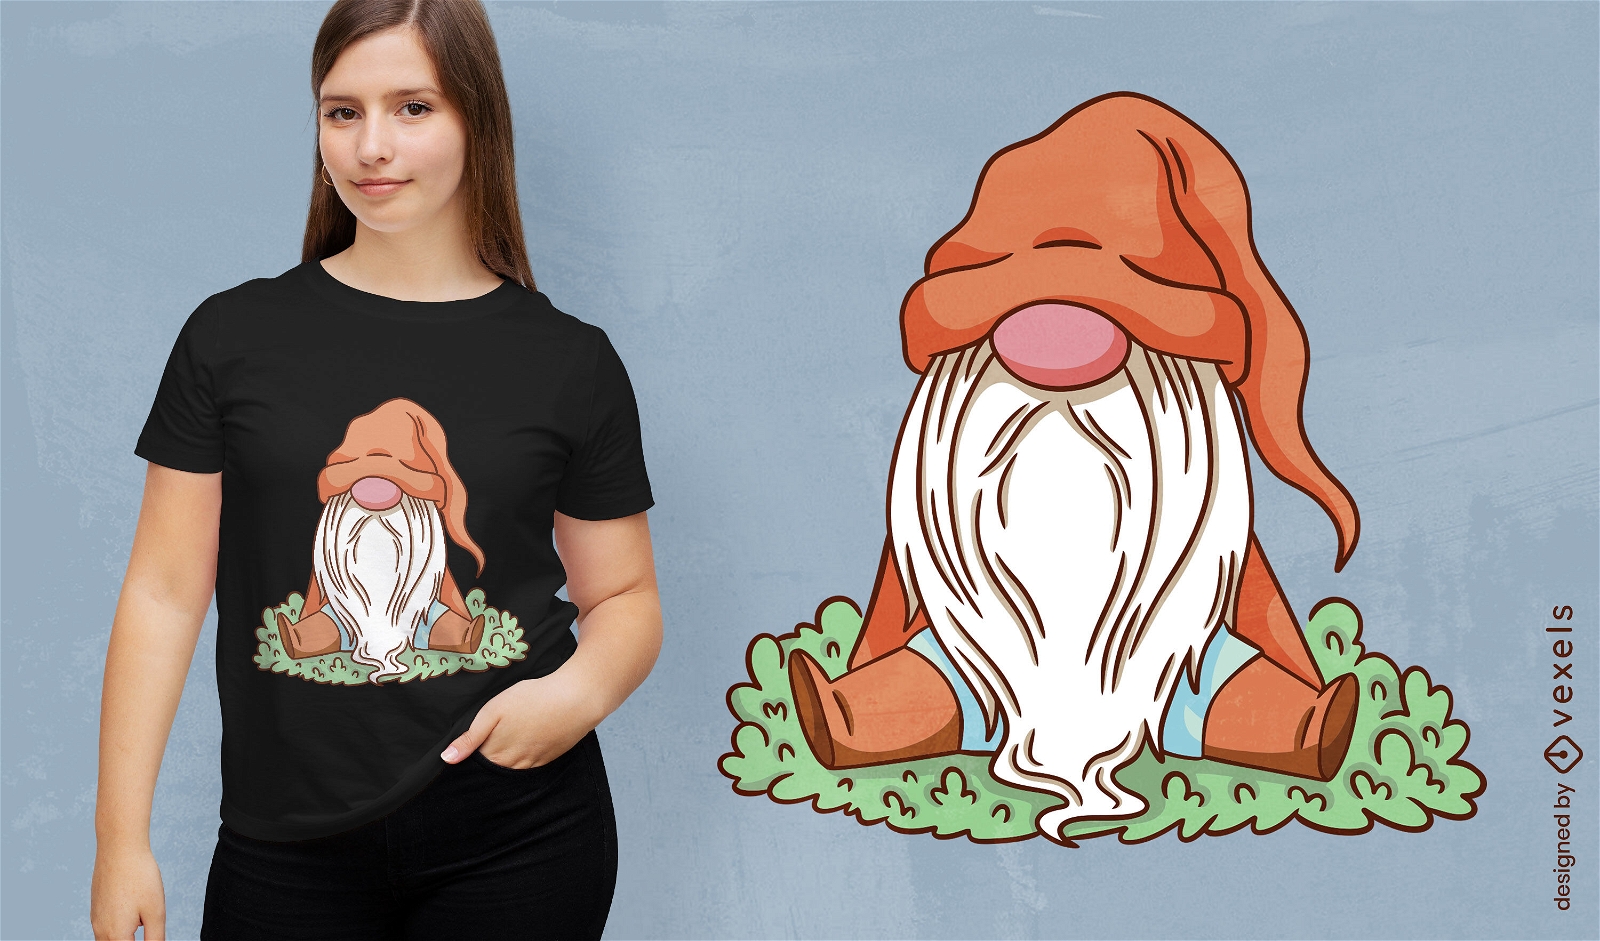 Gnome sitting on grass t-shirt design